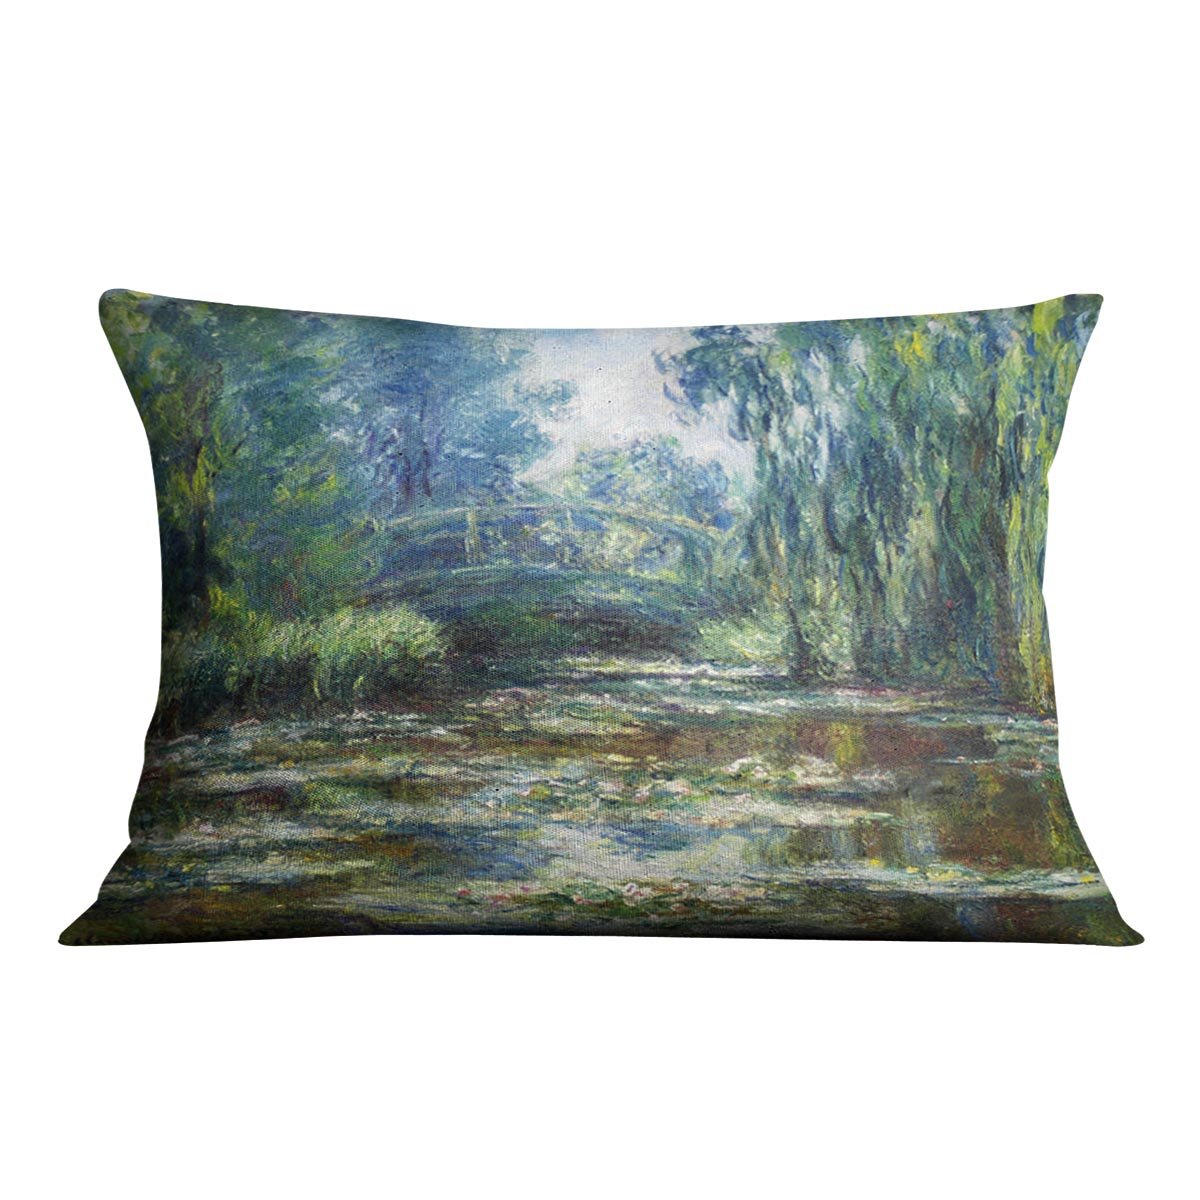 Water Lillies in Monets Garden by Monet Throw Pillow